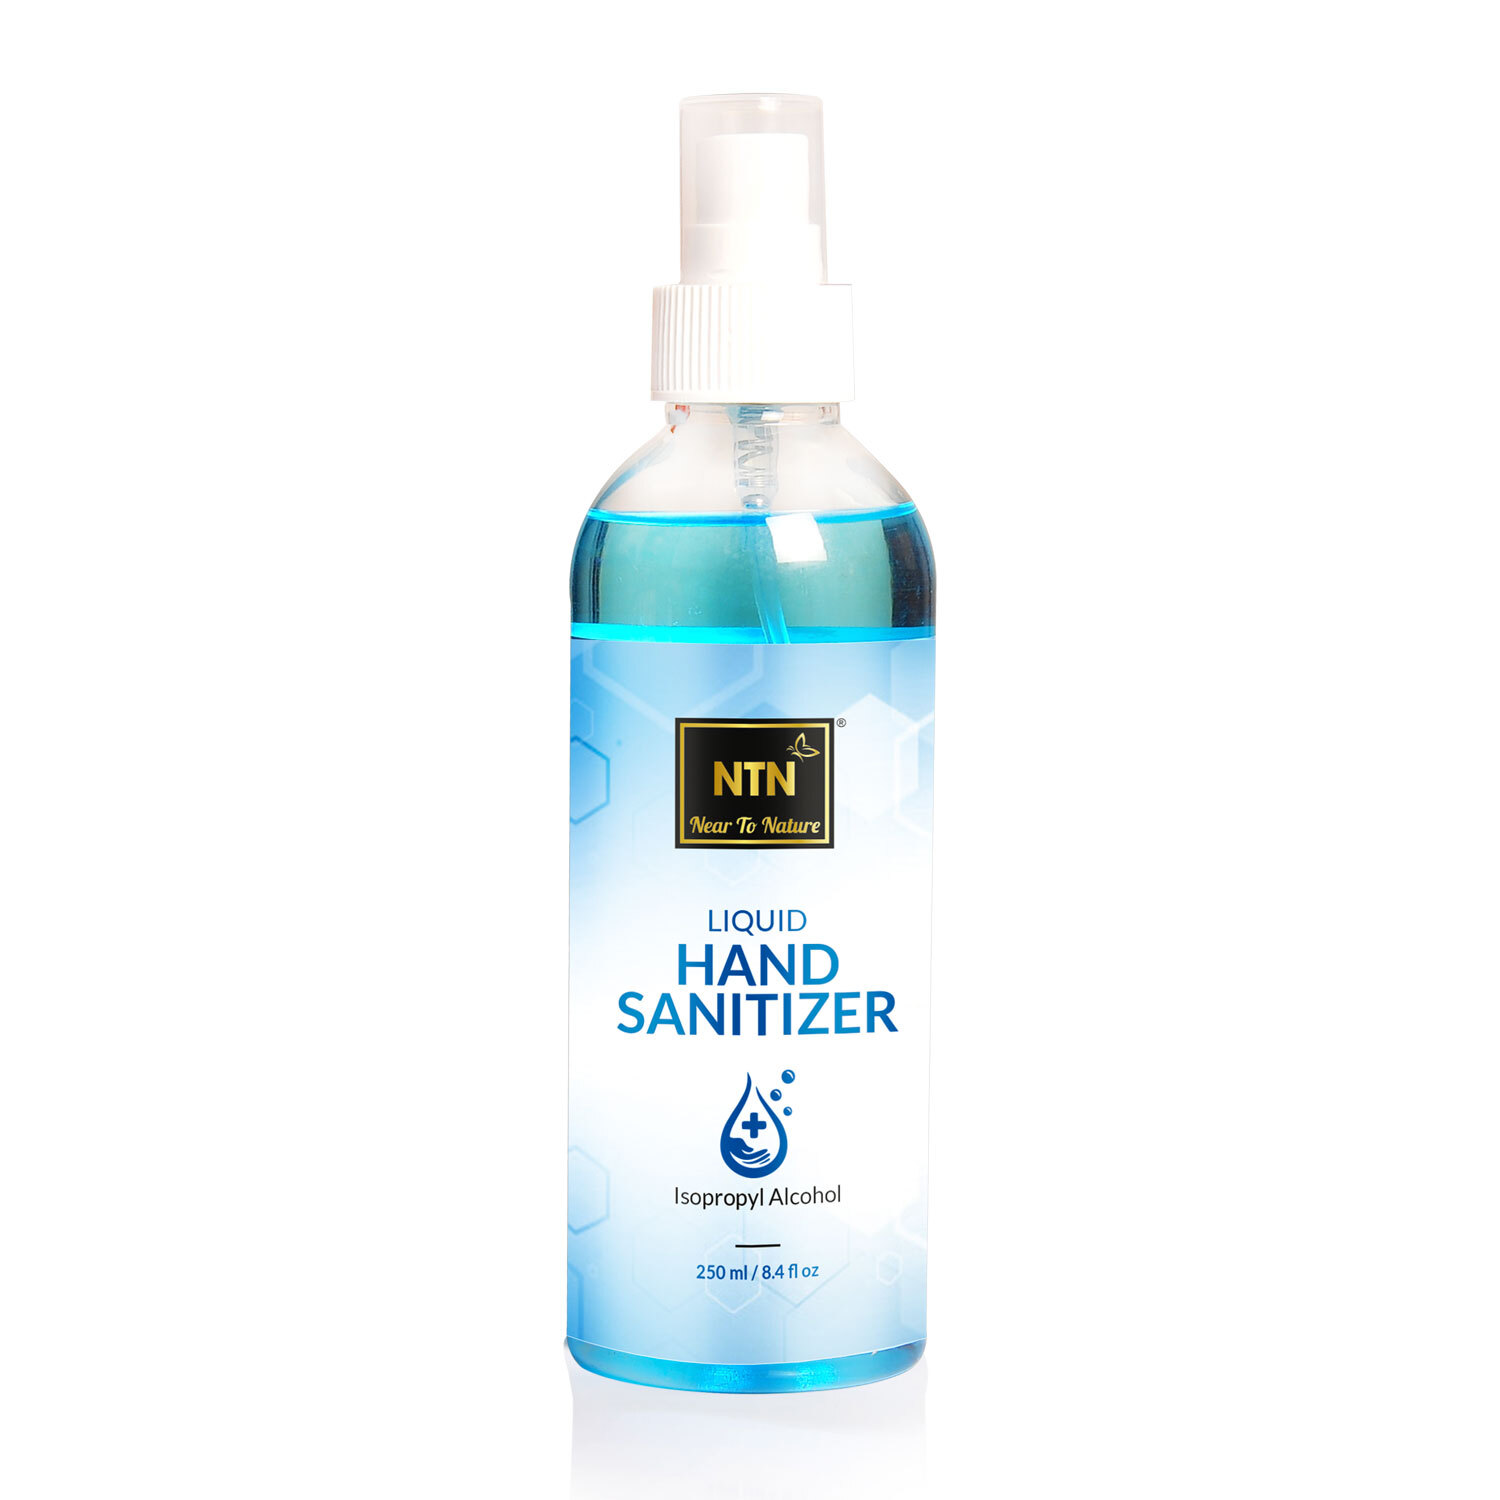 NTN Liquid Hand Sanitizer